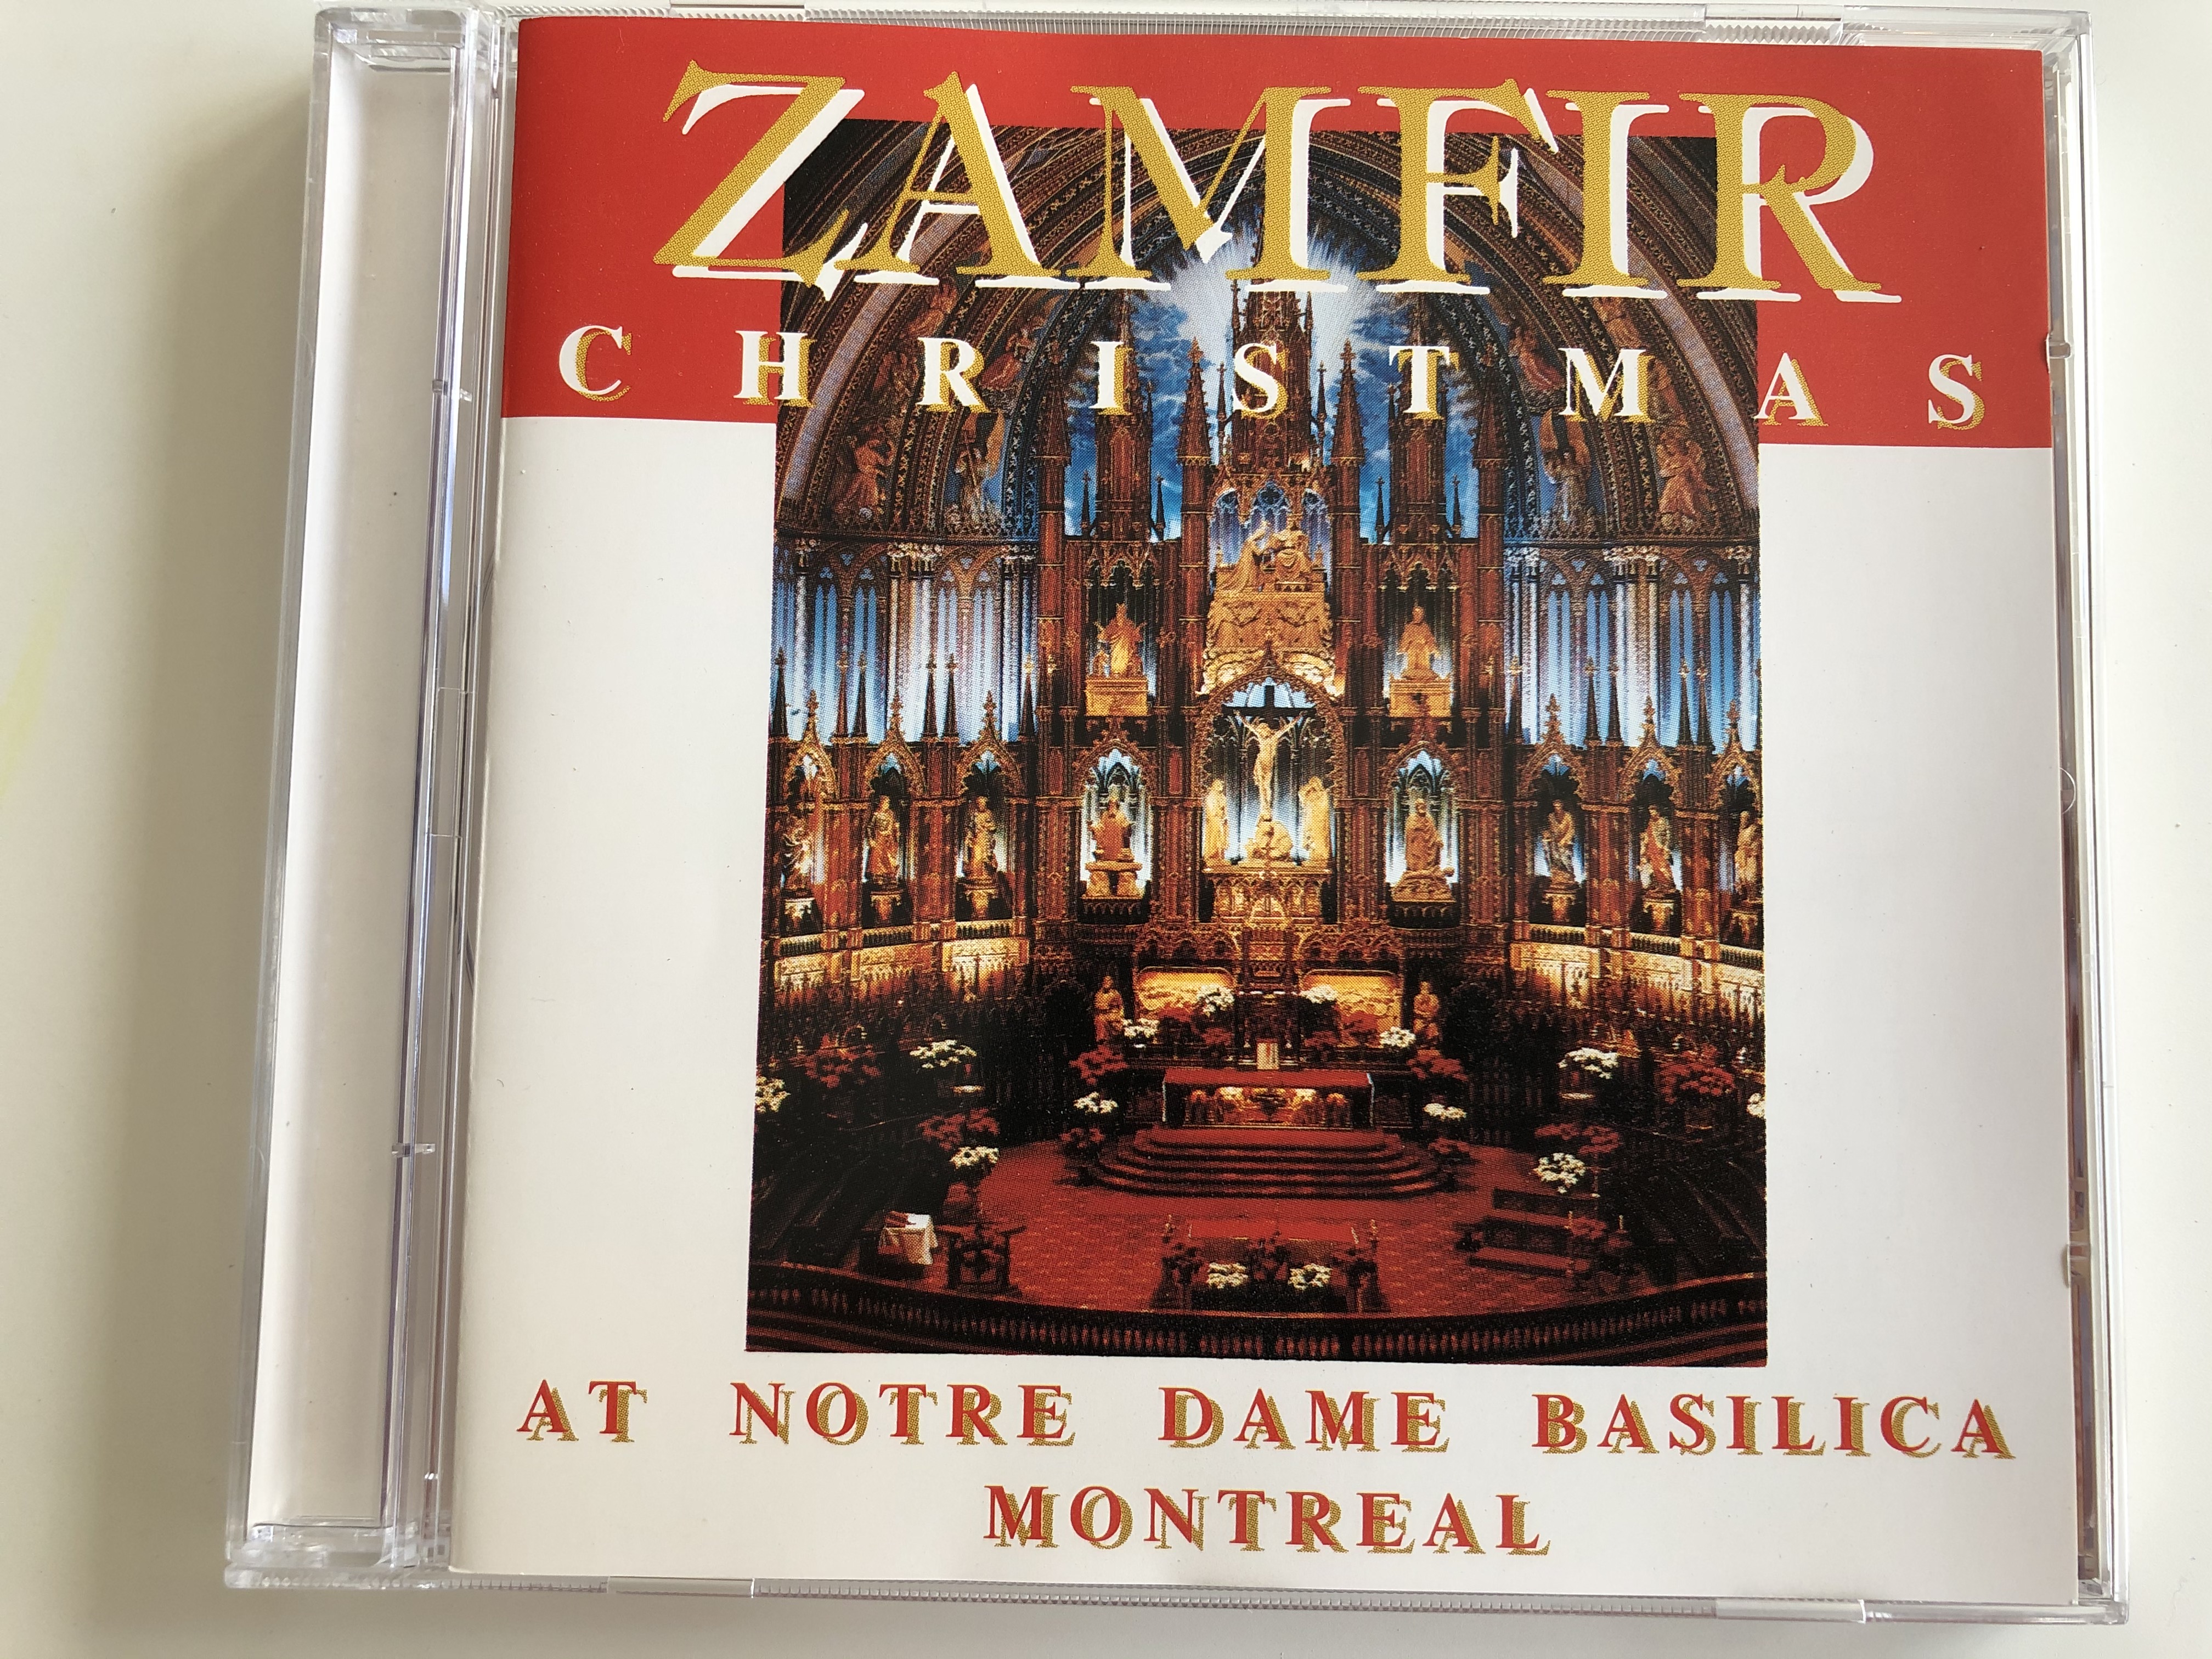 zamfir-christmas-at-notre-dame-basilica-montreal-mercury-audio-cd-1991-517-453-2-1-.jpg